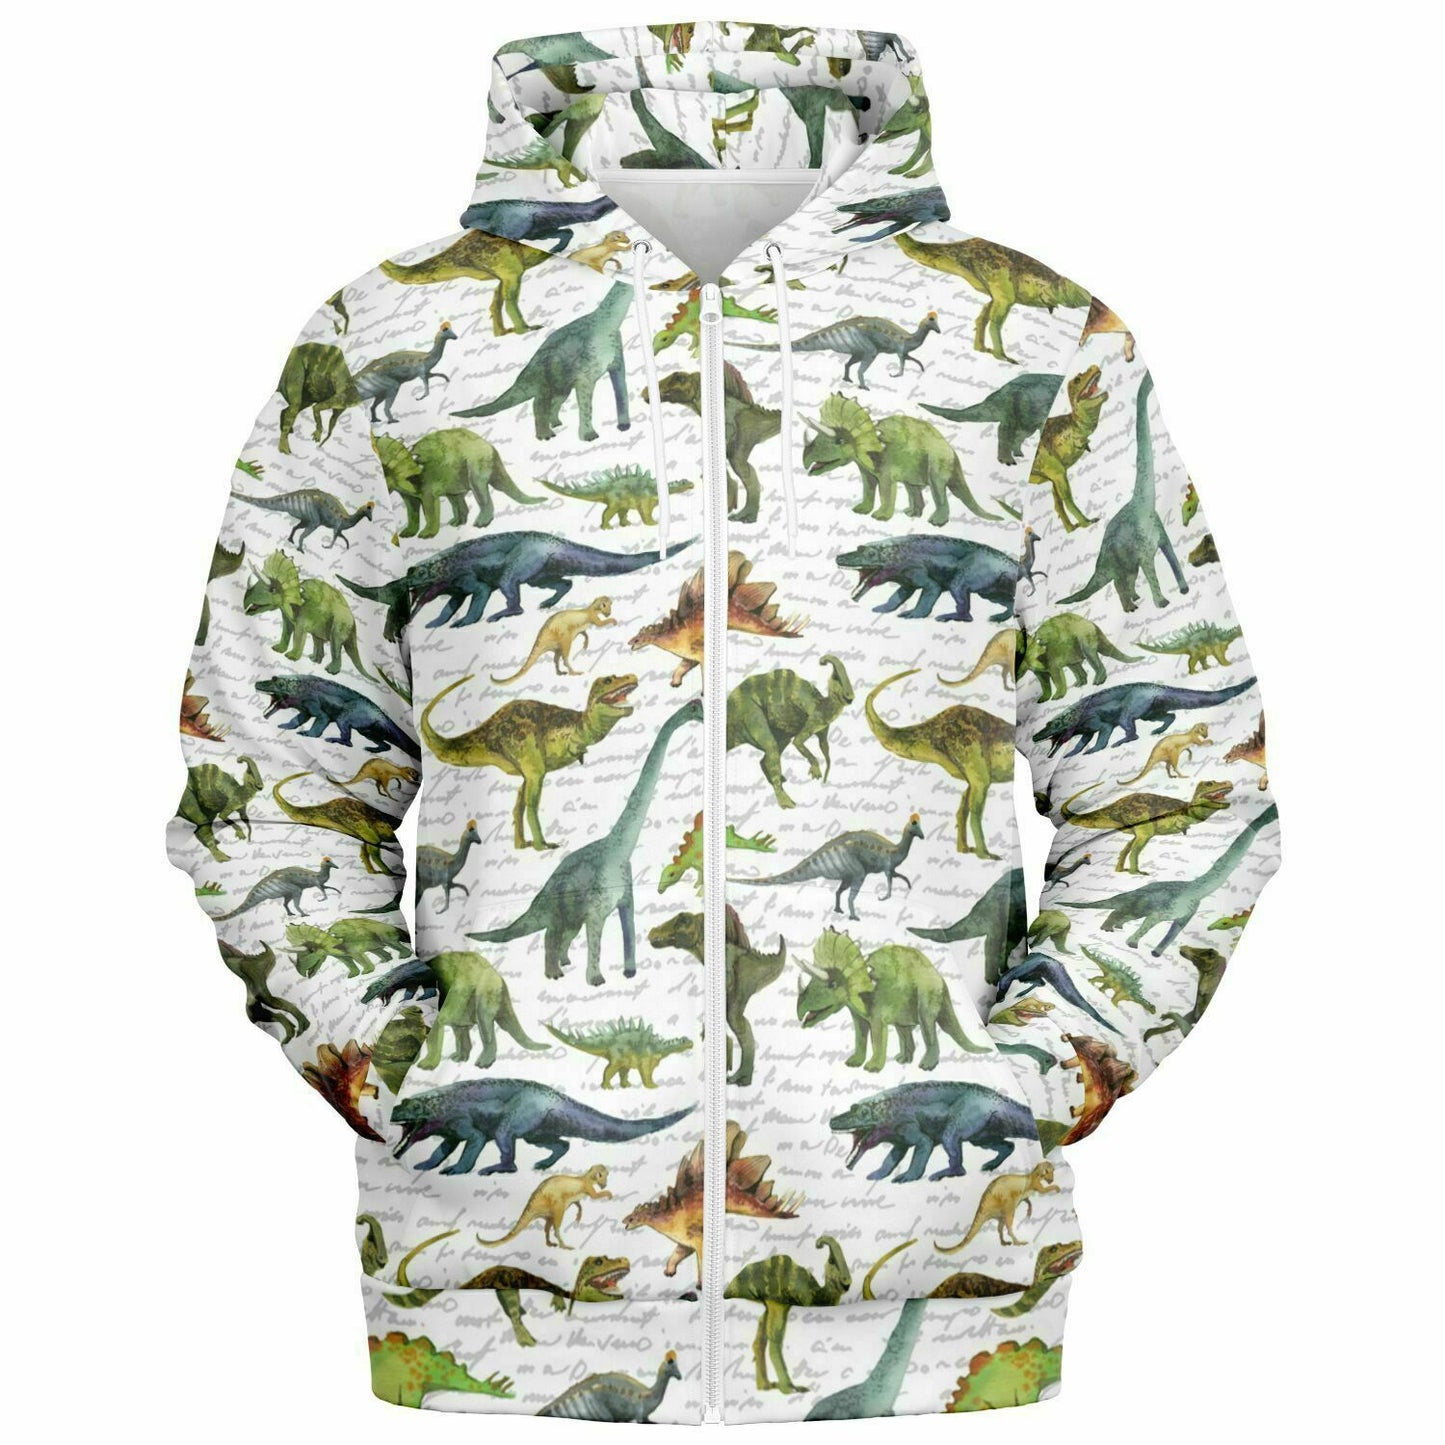 Dinosaur Zip Up Hoodie, Dino Trex Green White Cute Full Zipper Men Women Male Ladies Adult Aesthetic Graphic Cotton Hooded Sweatshirt Pockets